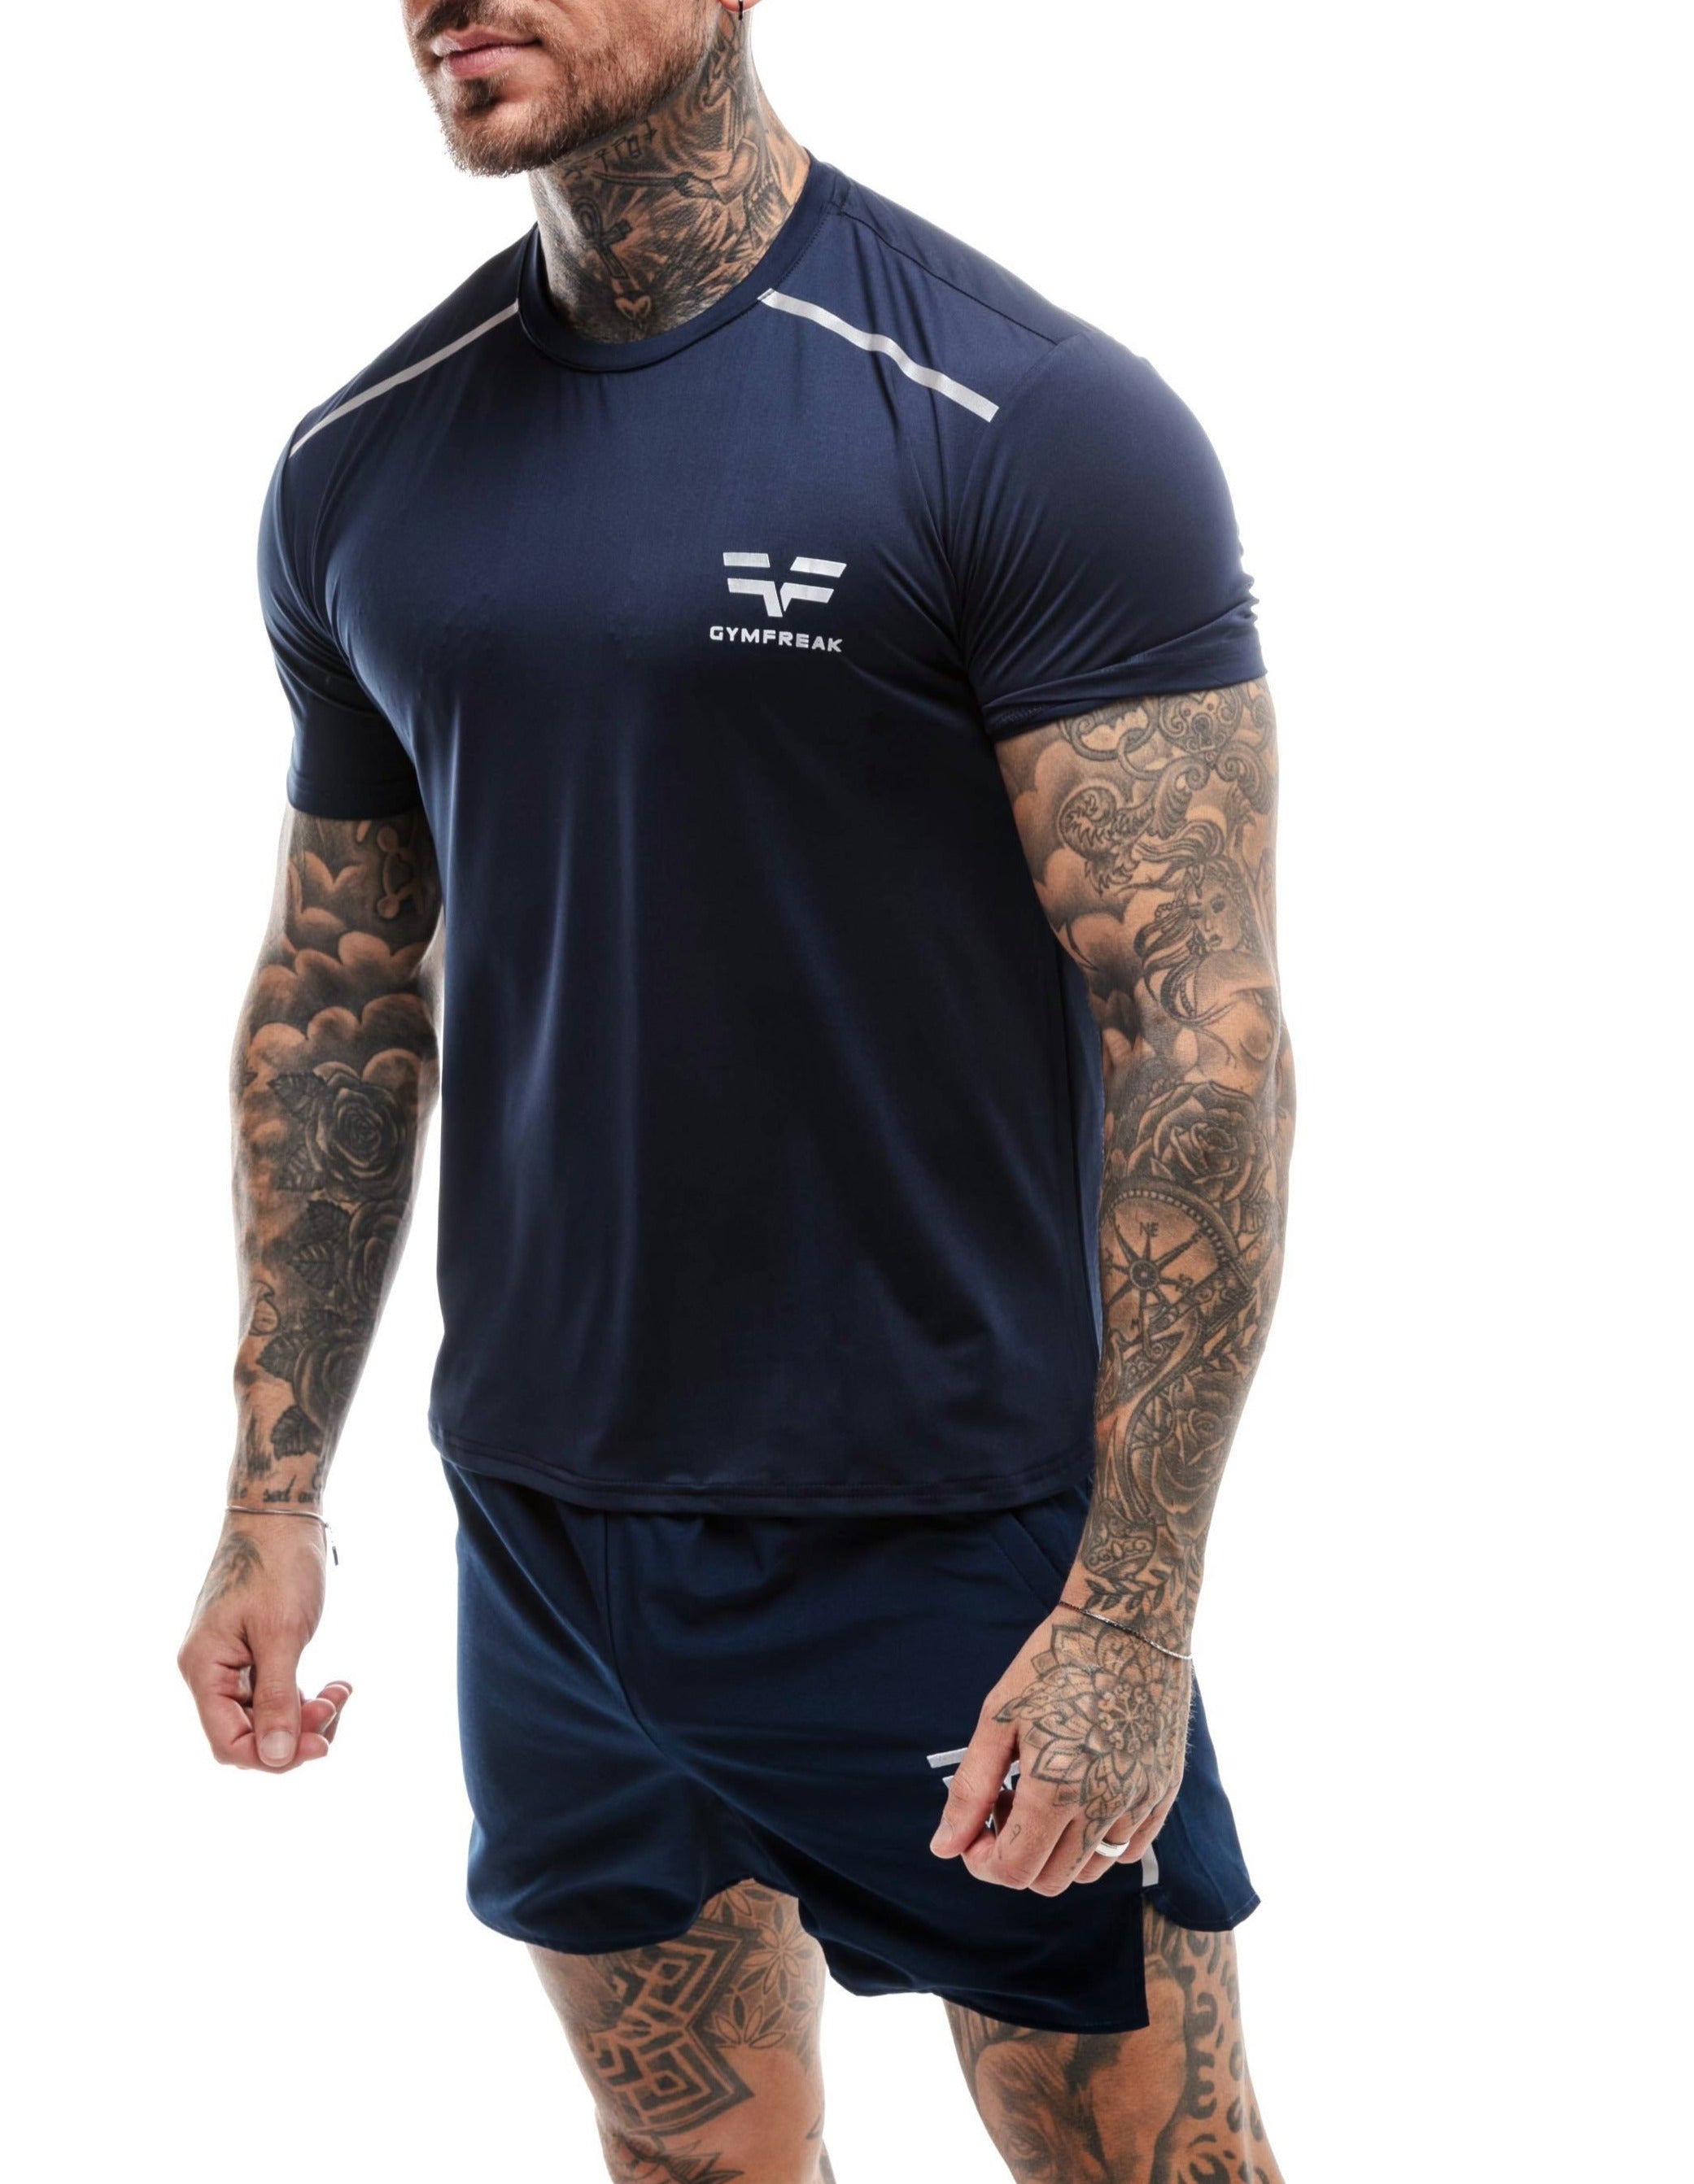 GymFreak Mens Fusion T-Shirt - Navy Blue